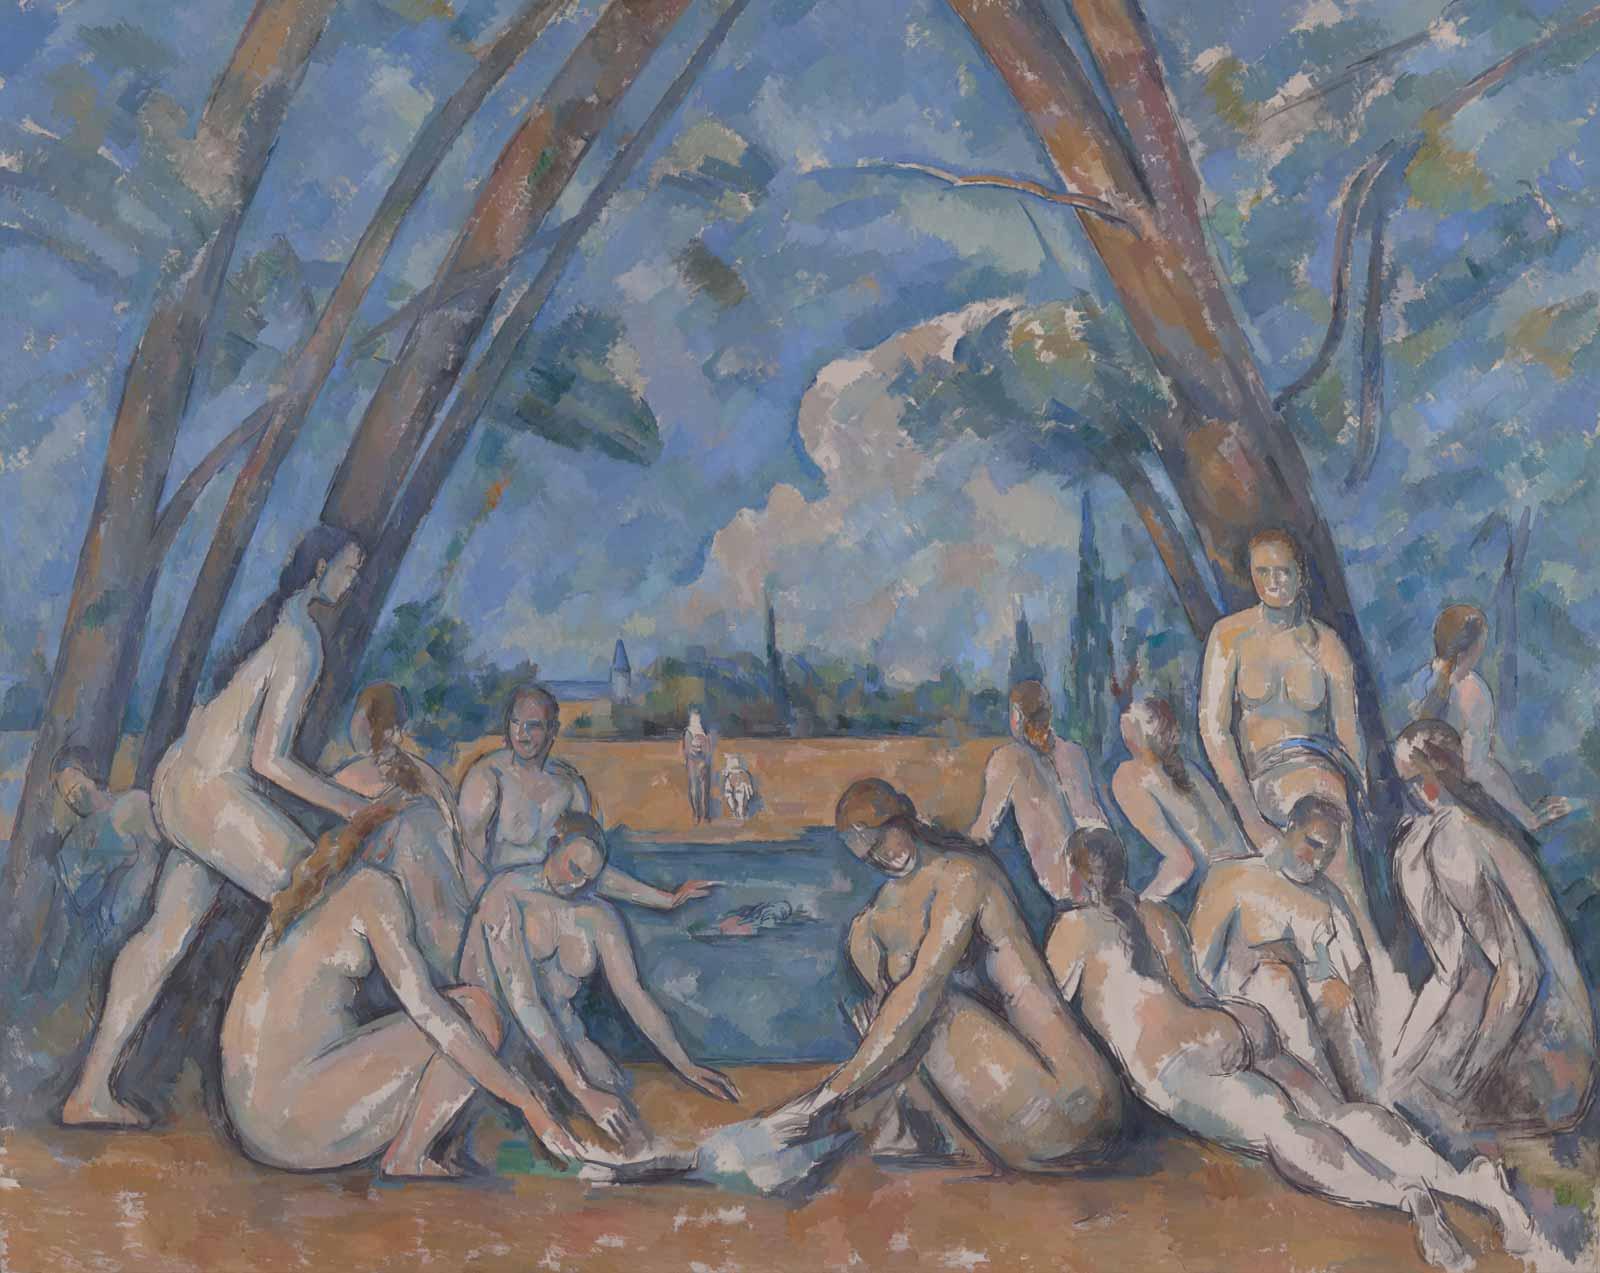 The Large Bathers, 1900-1906, by Paul Cézanne.